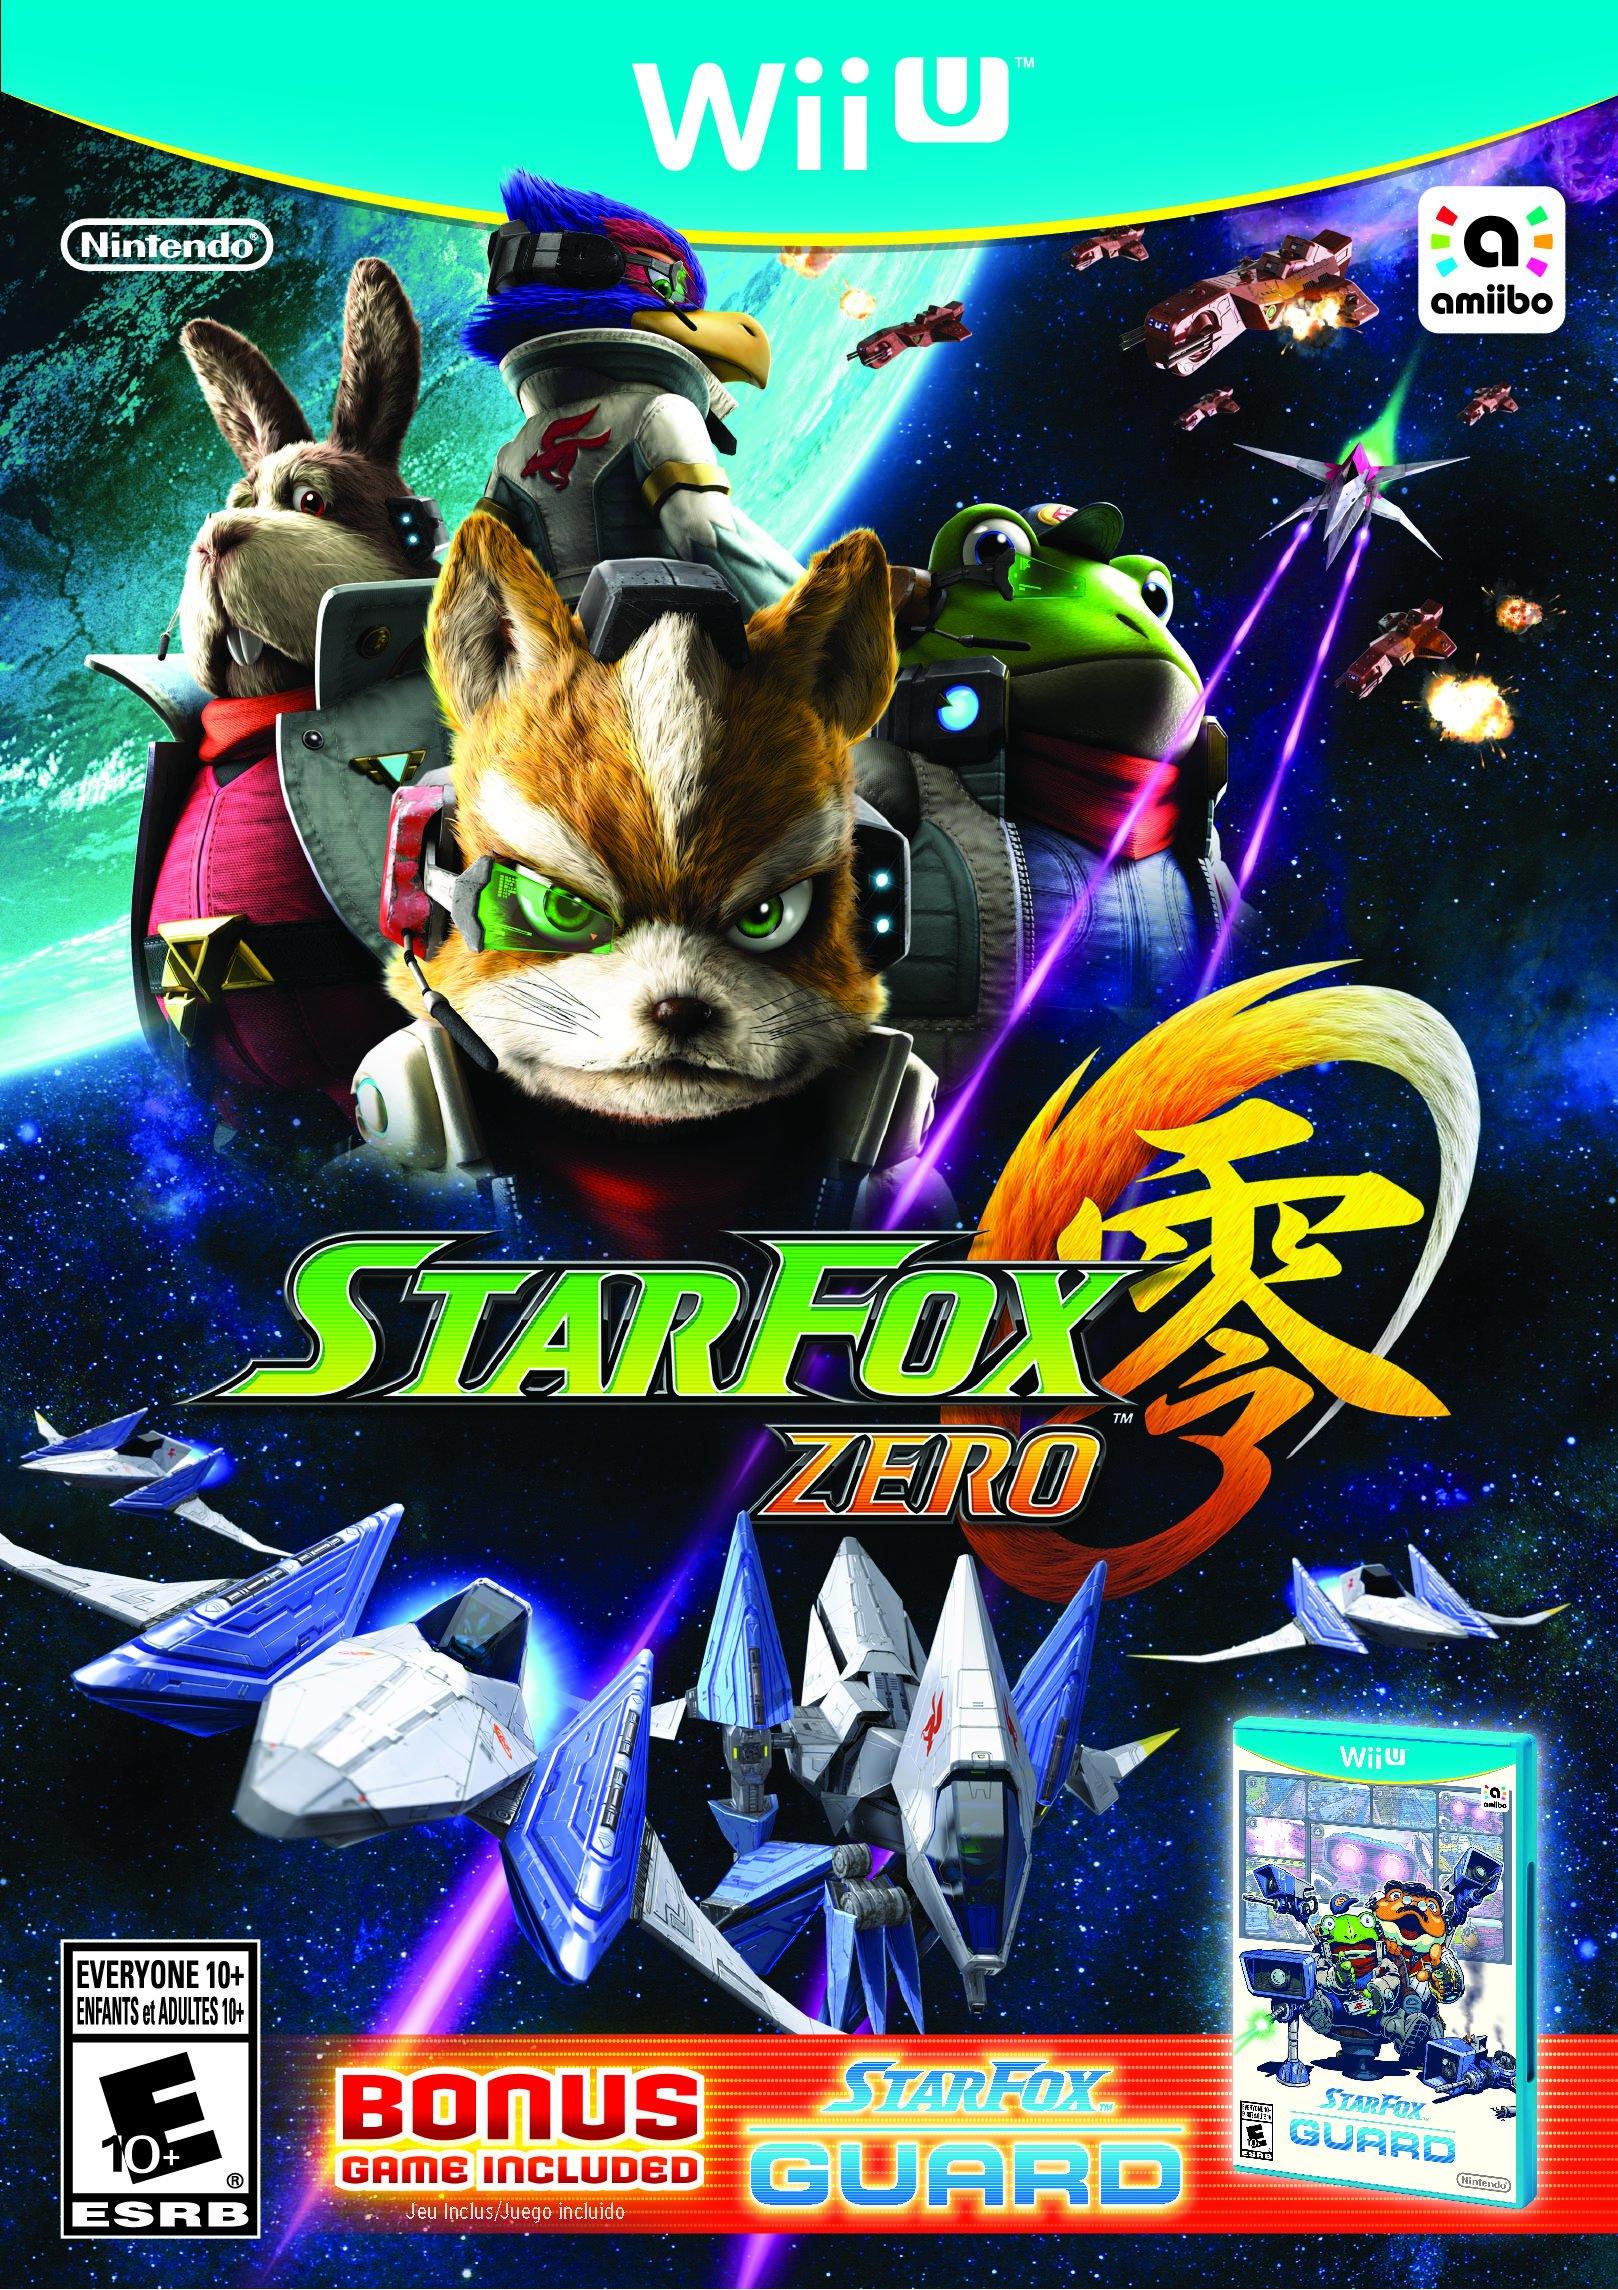 Ranking The Star Fox Series - Game Informer